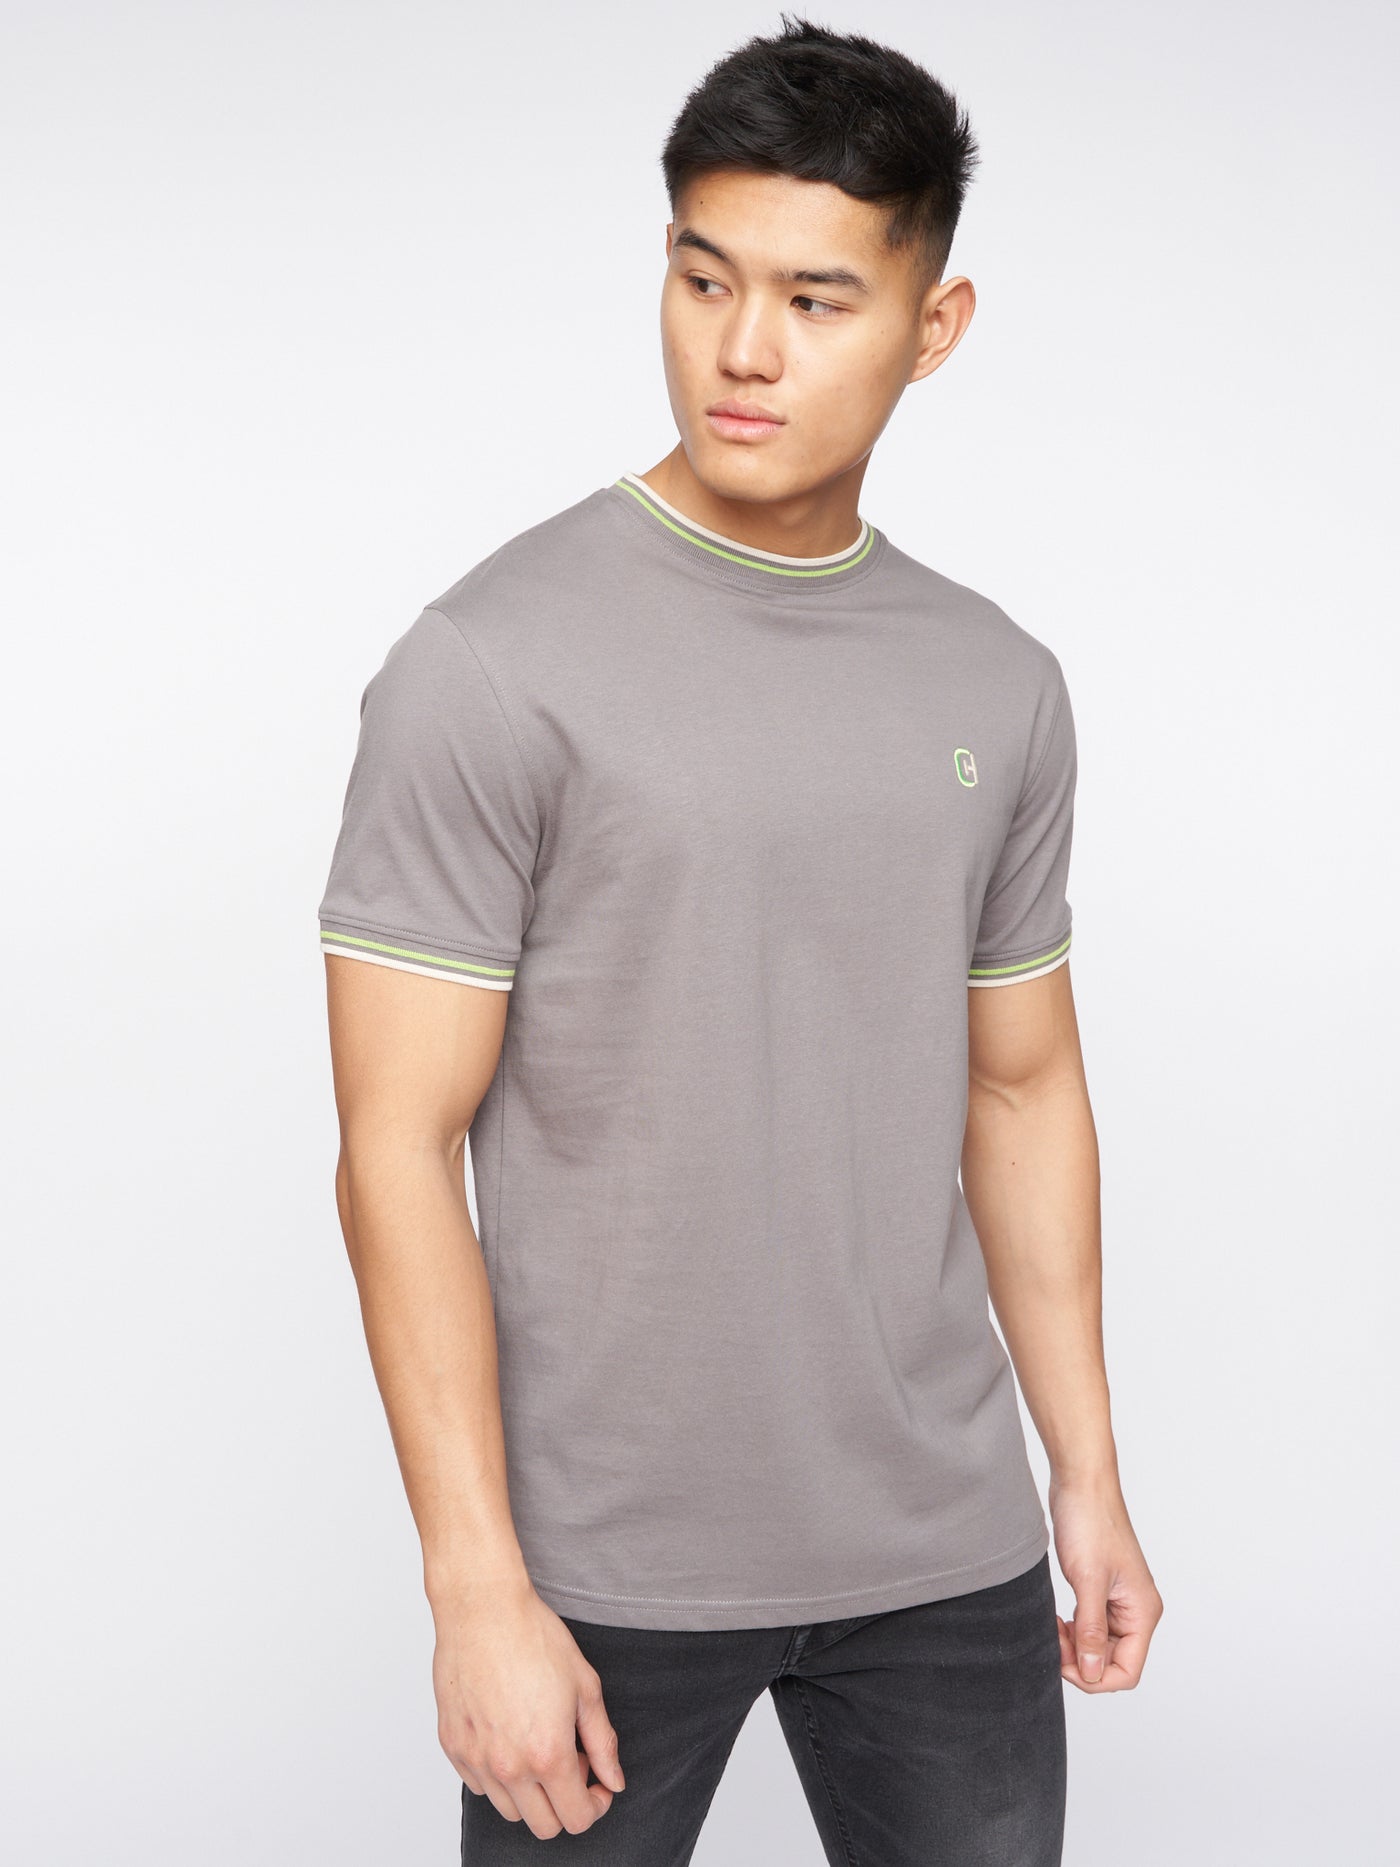 Ordale T-Shirt Grey